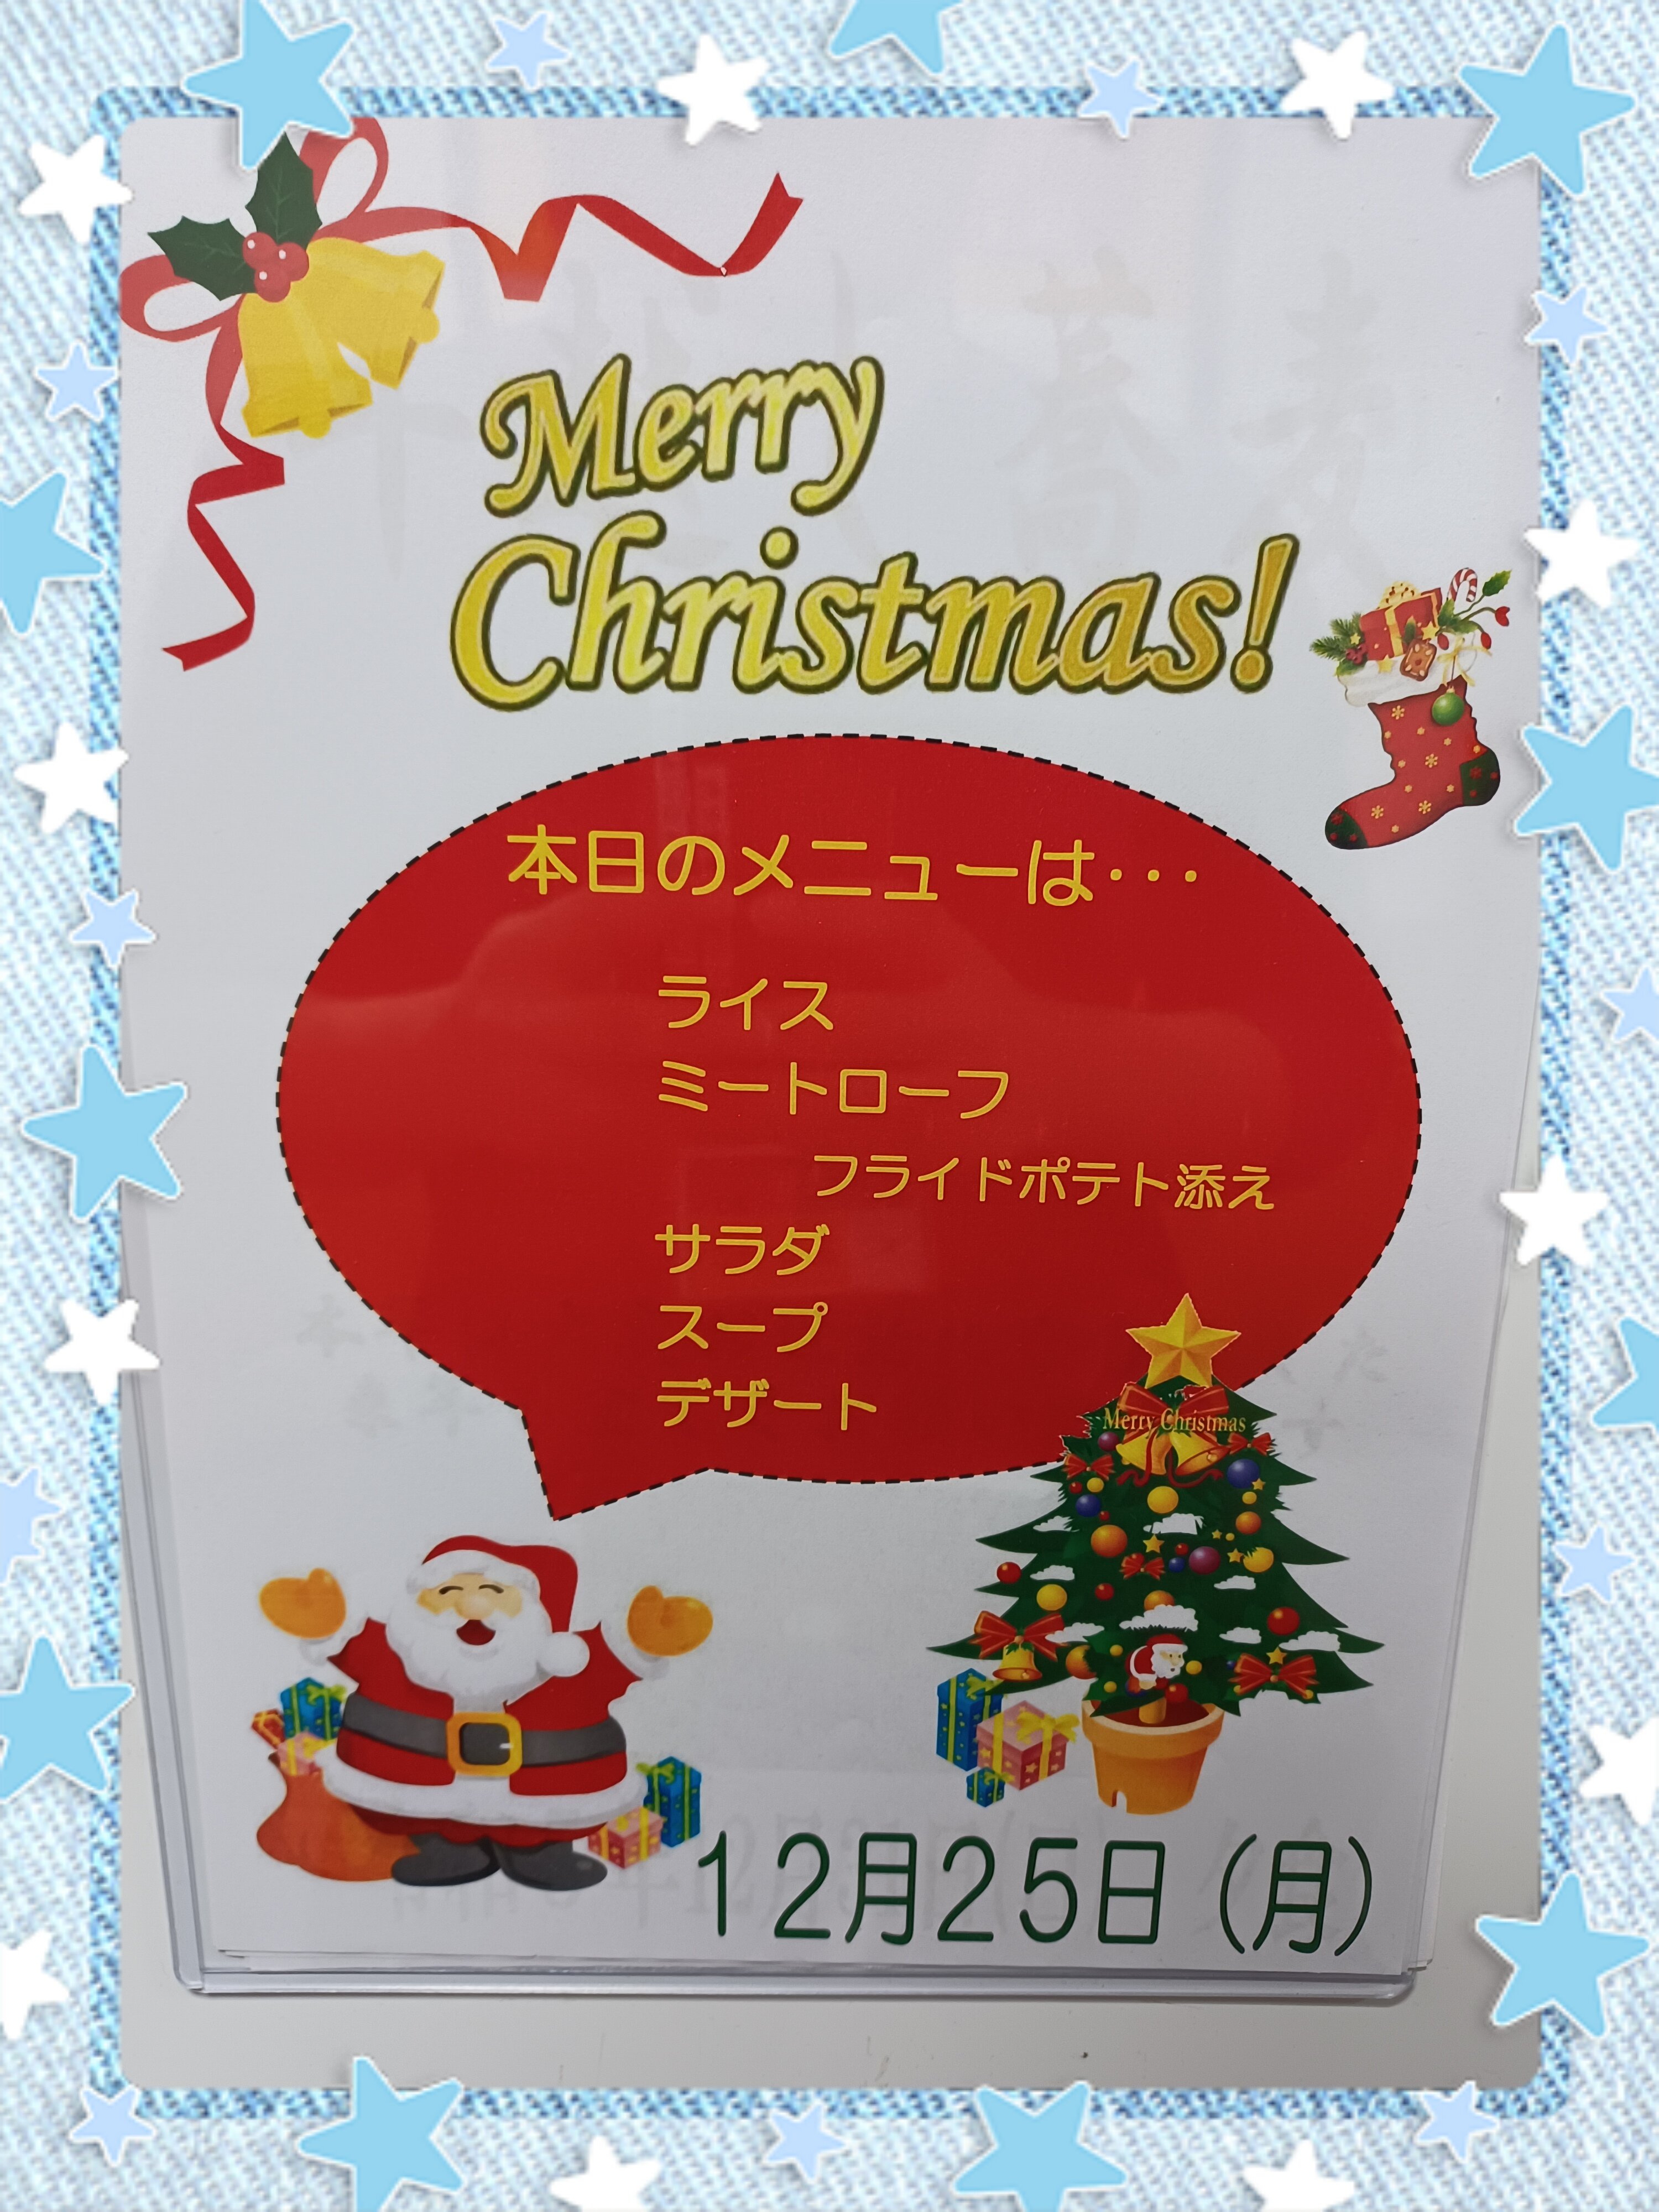 https://www.supercourt.jp/blog/kawanishi/23-12-25-12-07-21-445_deco%5B1%5D.jpg